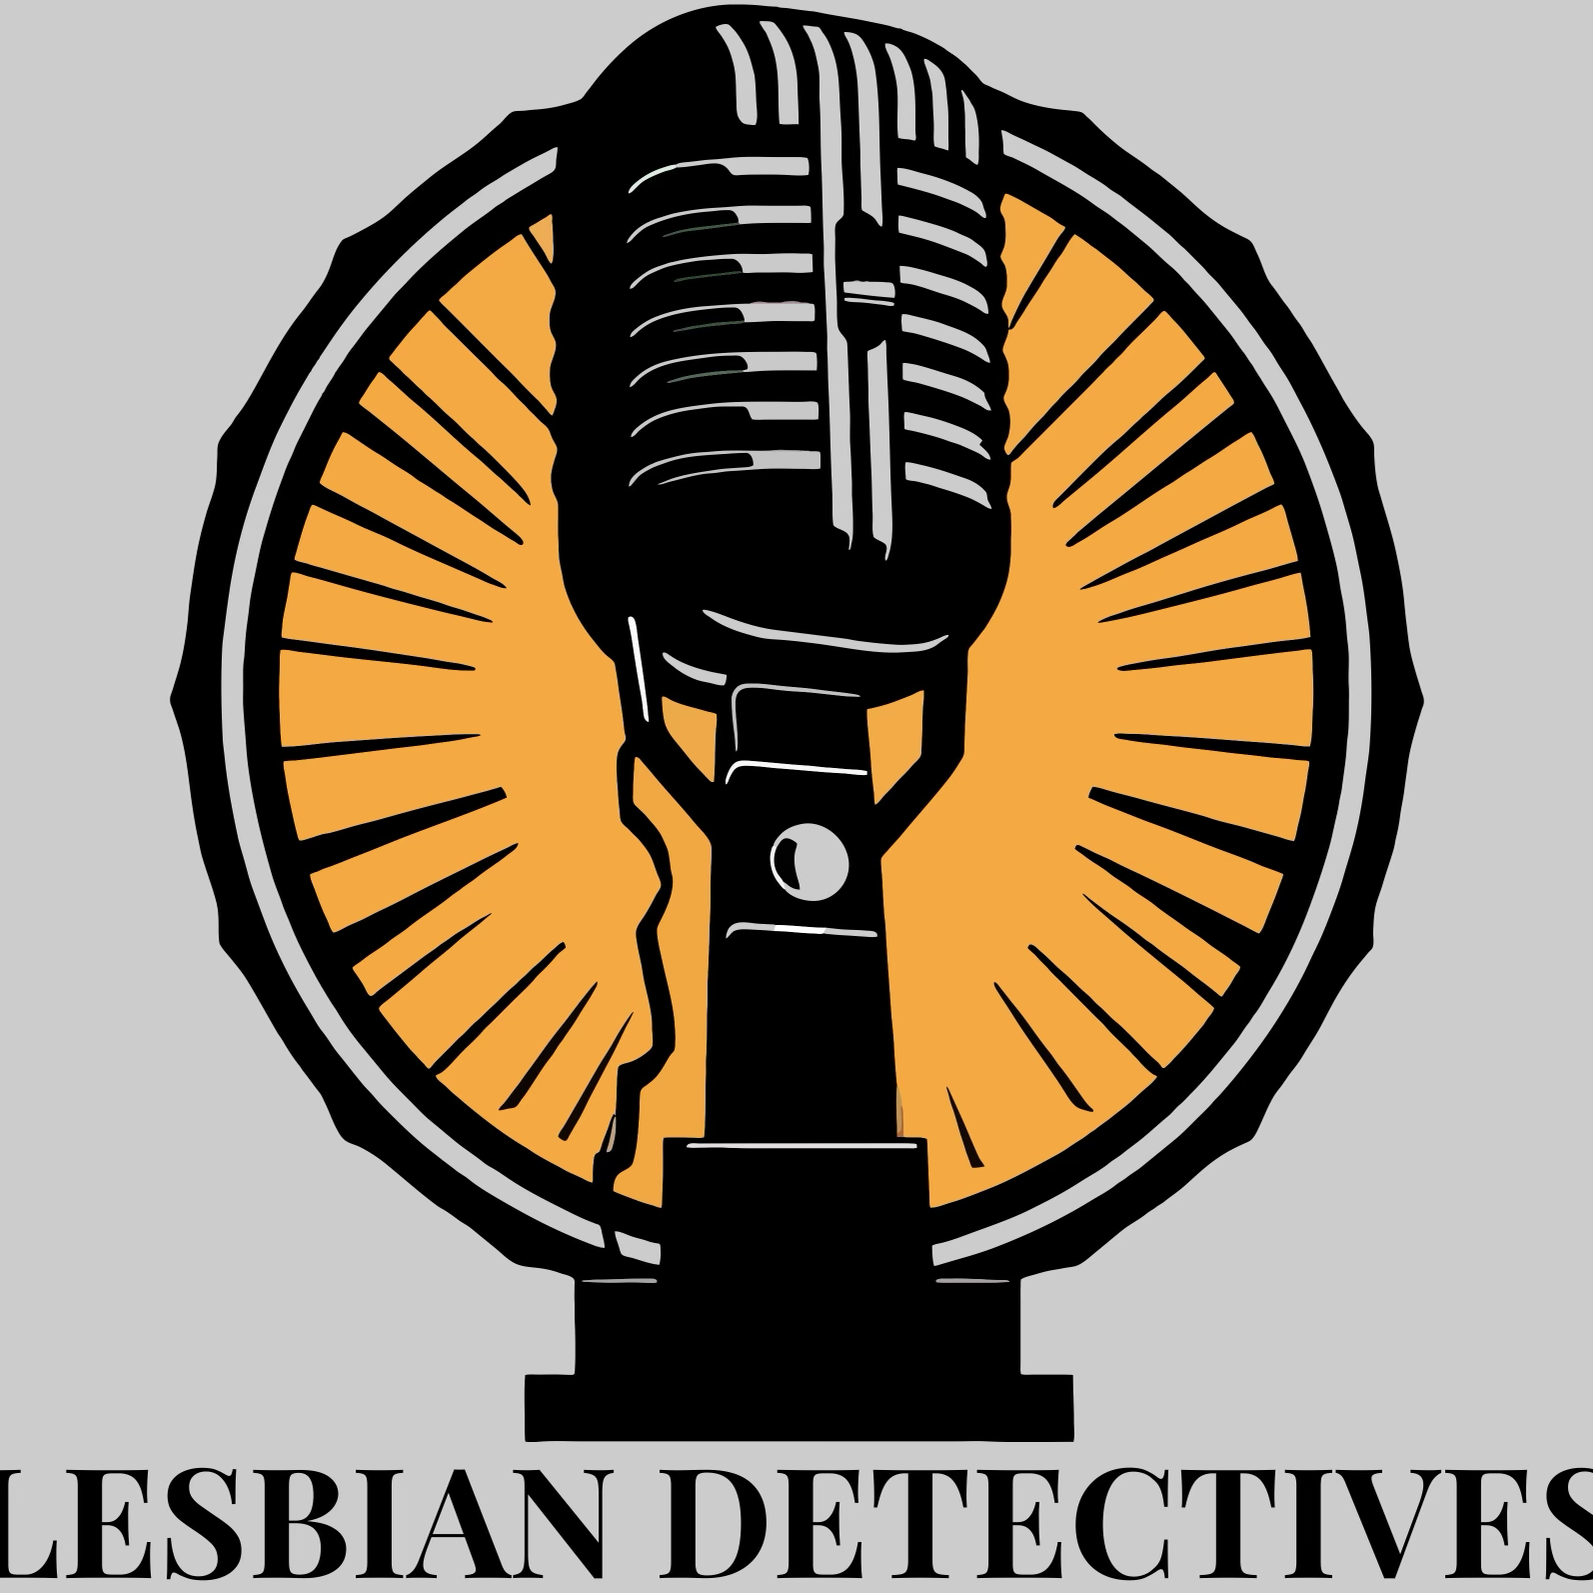 Lesbian Detectives